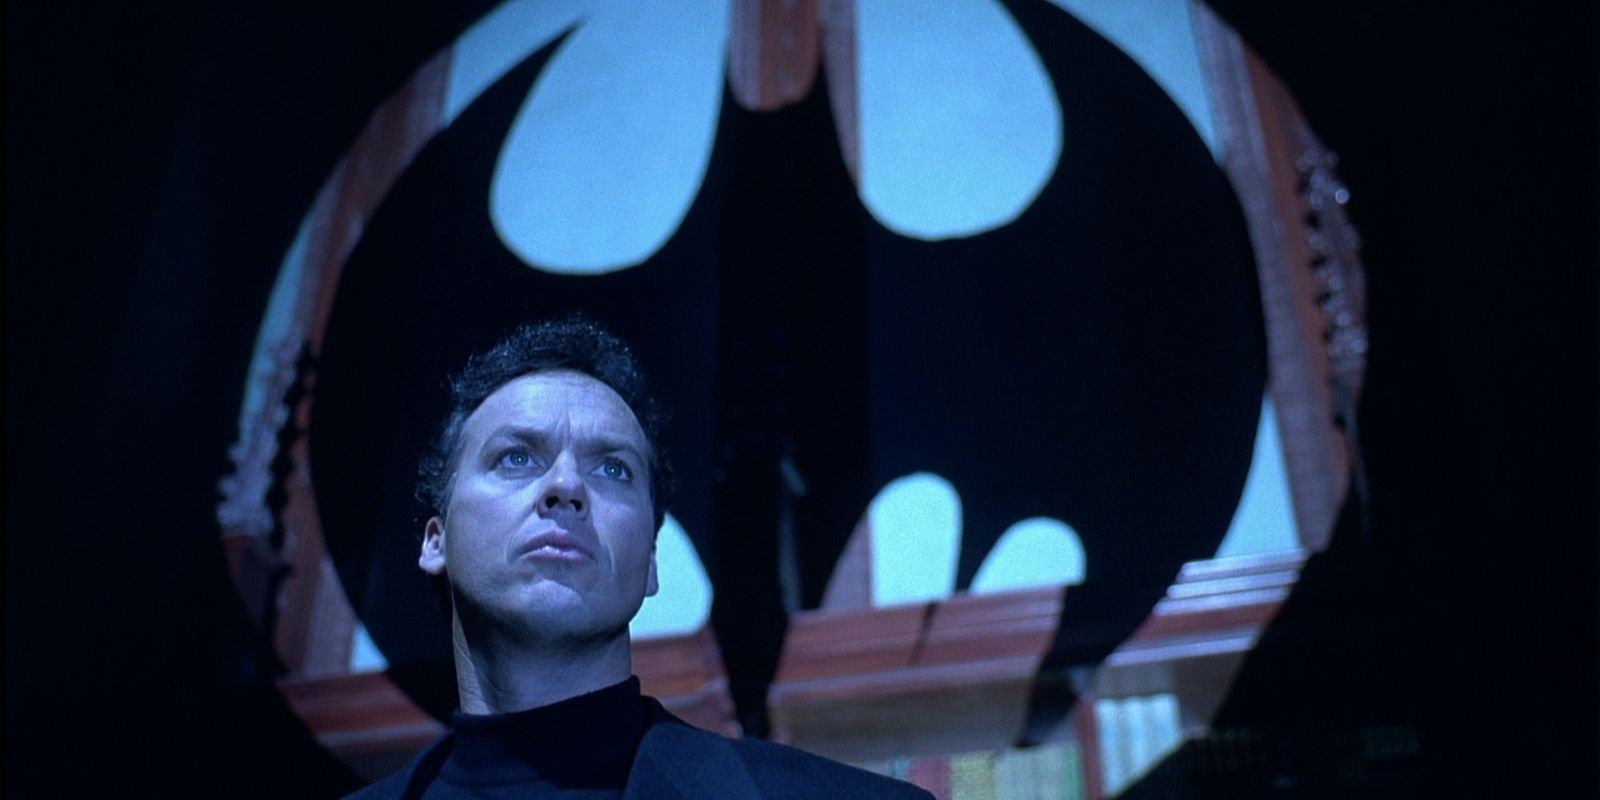 Michael Keaton's Bruce Wayne in front of the Batman symbol